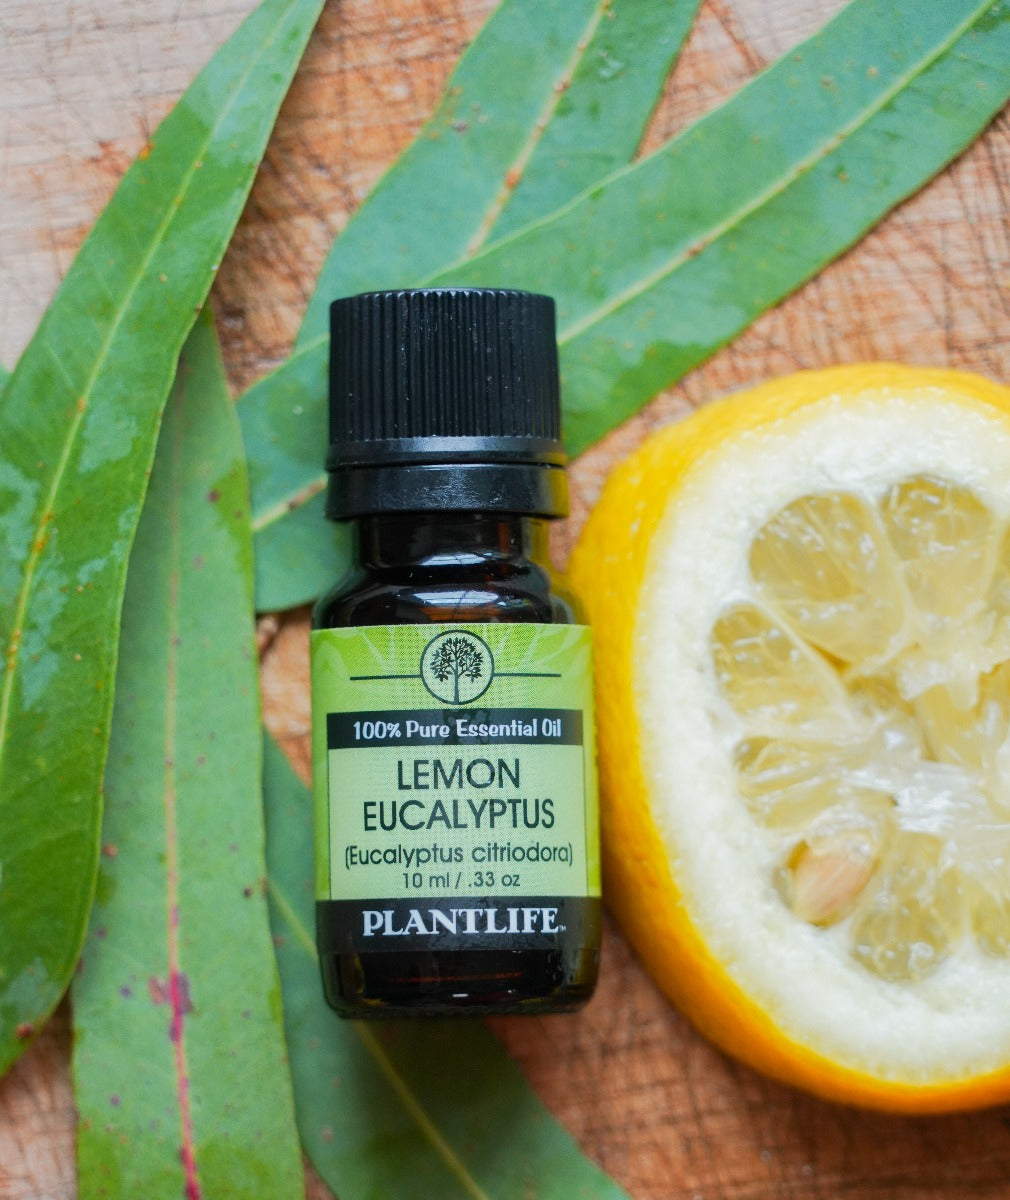 Lemon Oil - Uses & Benefits of Refreshing & Invigorating Essential Oil